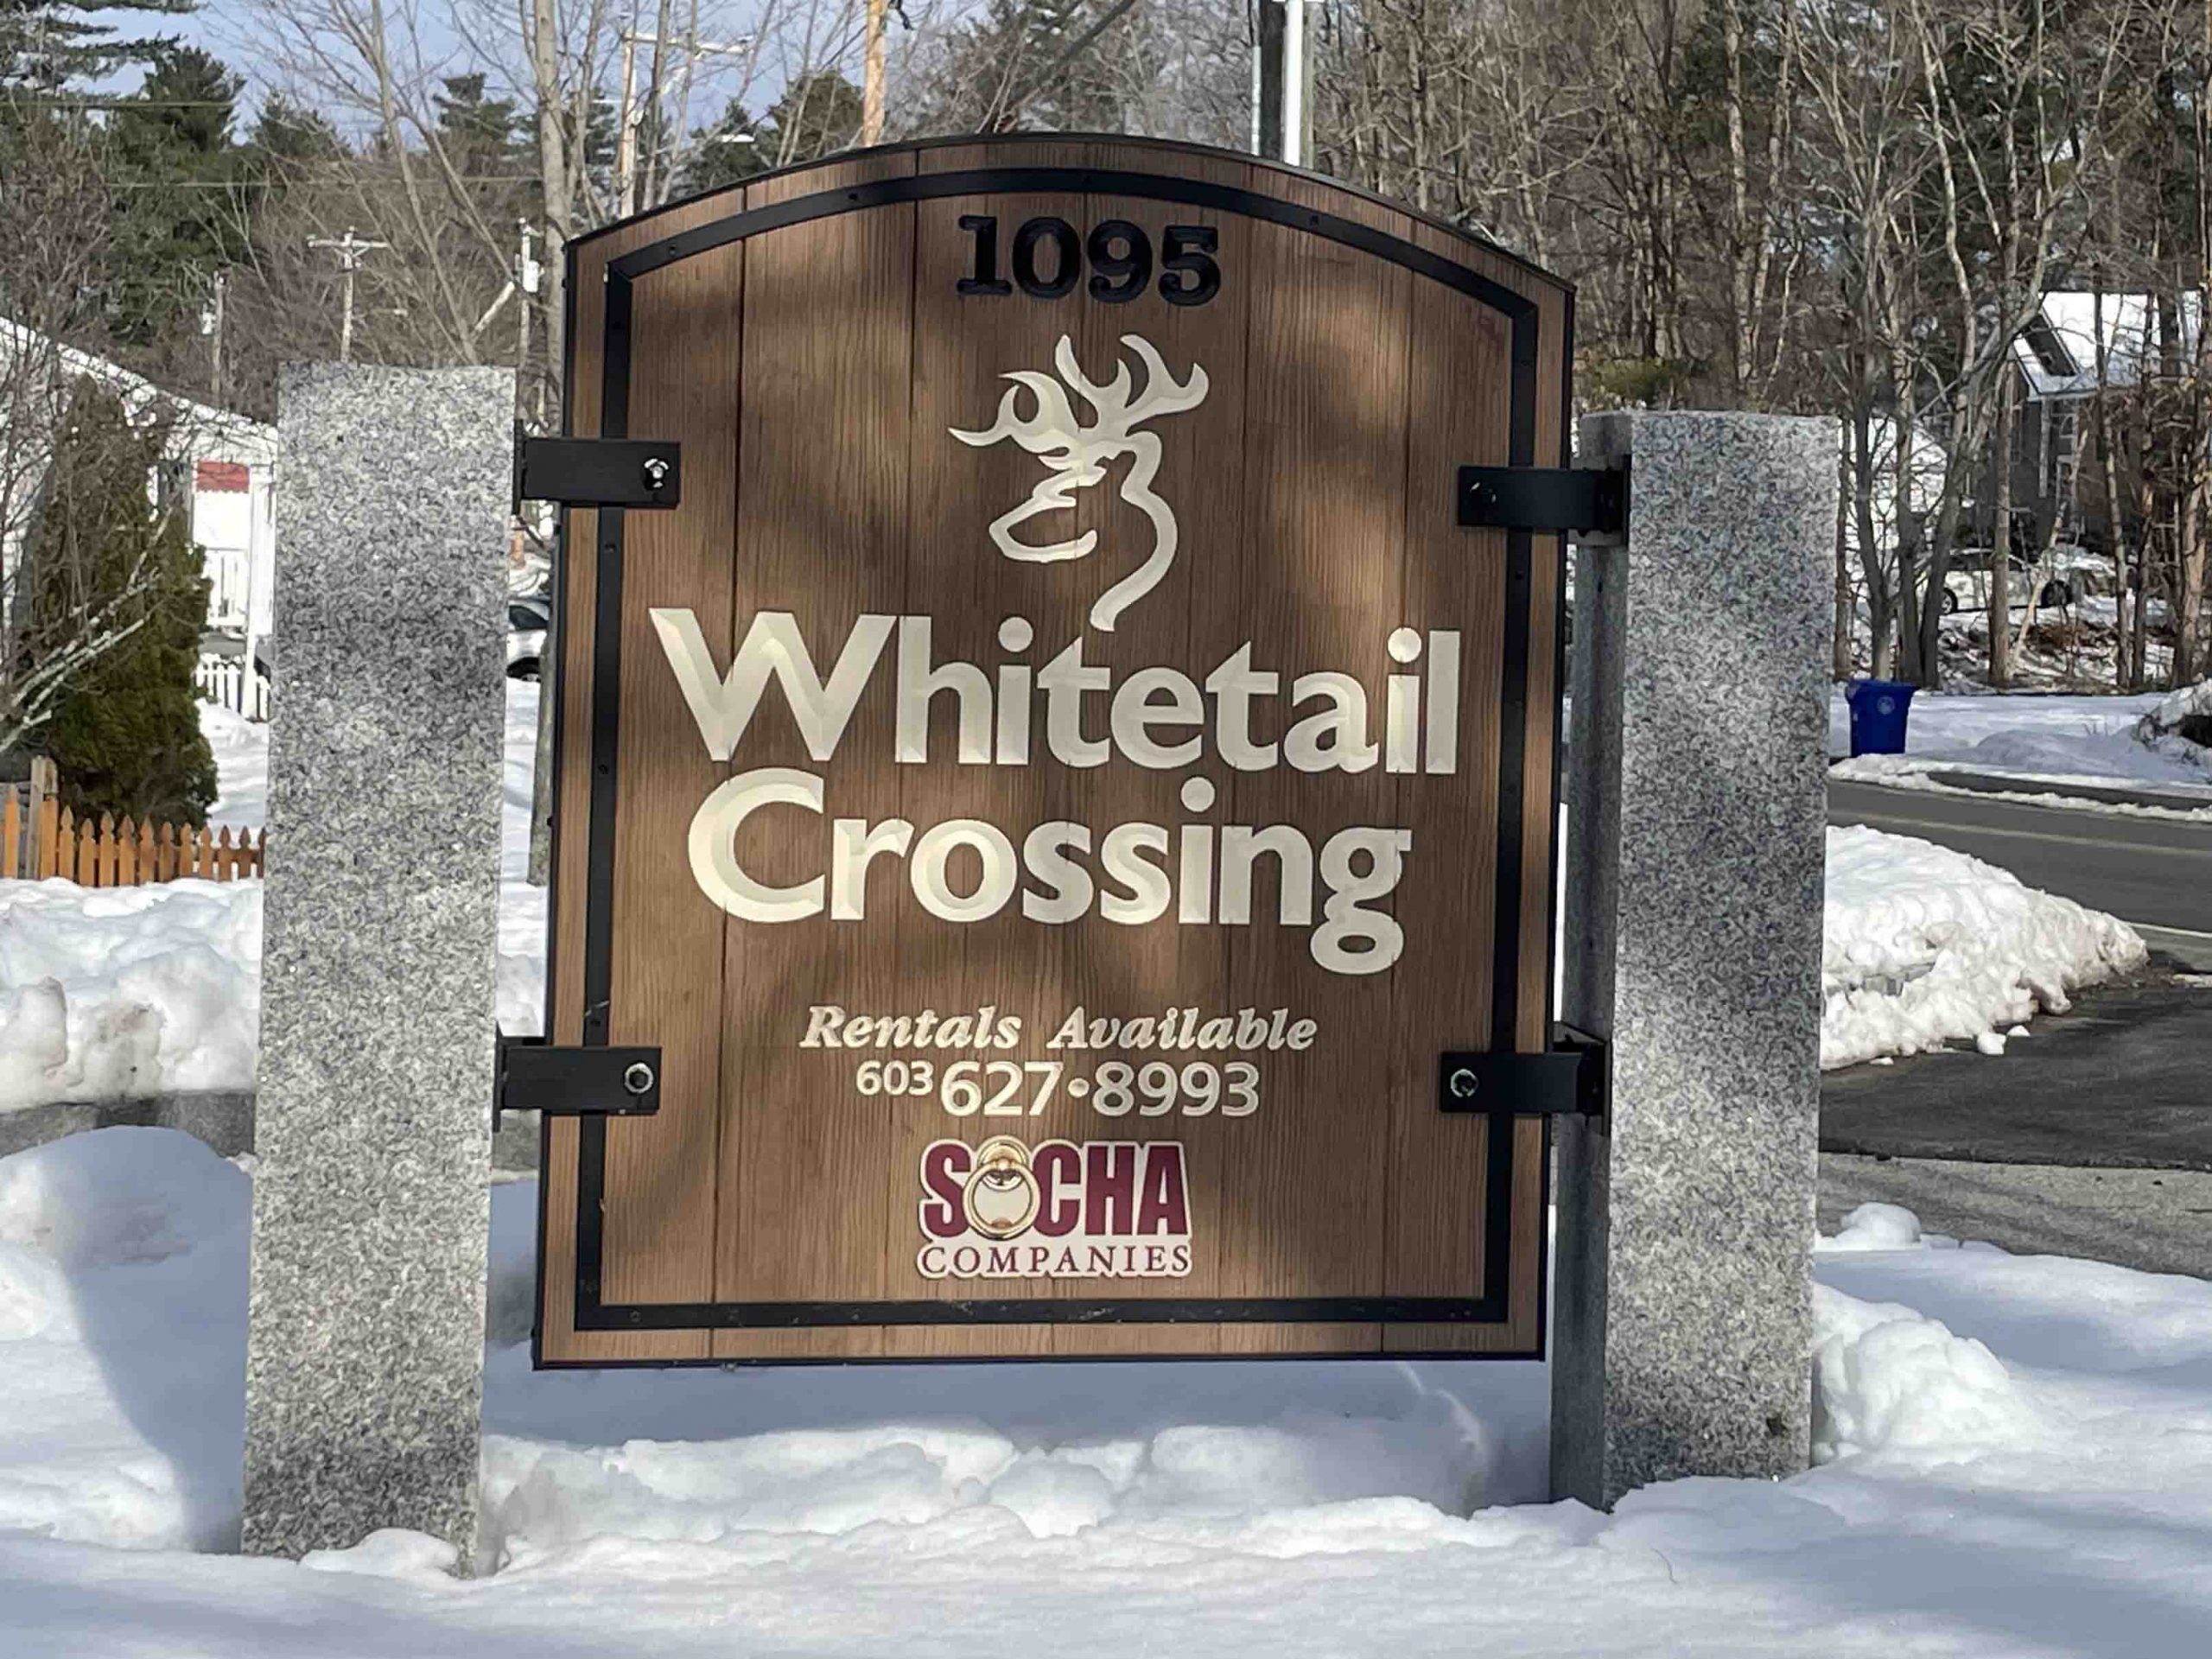 Whitetail Crossing by Socha Companies